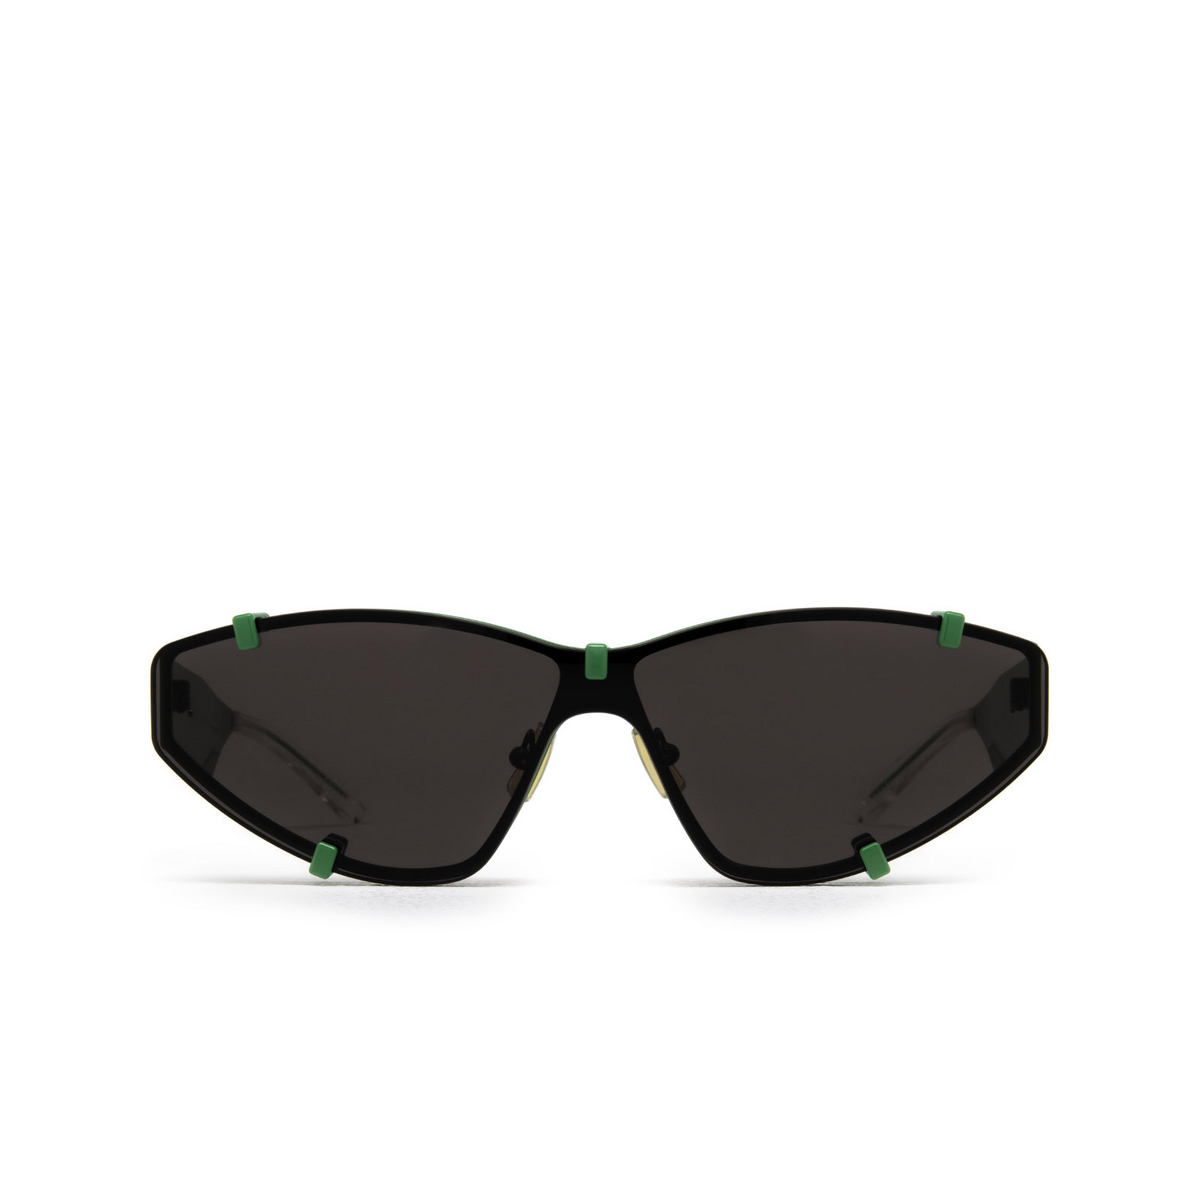 Bottega Veneta® Irregular Sunglasses: BV1165S color Green 001 - front view.